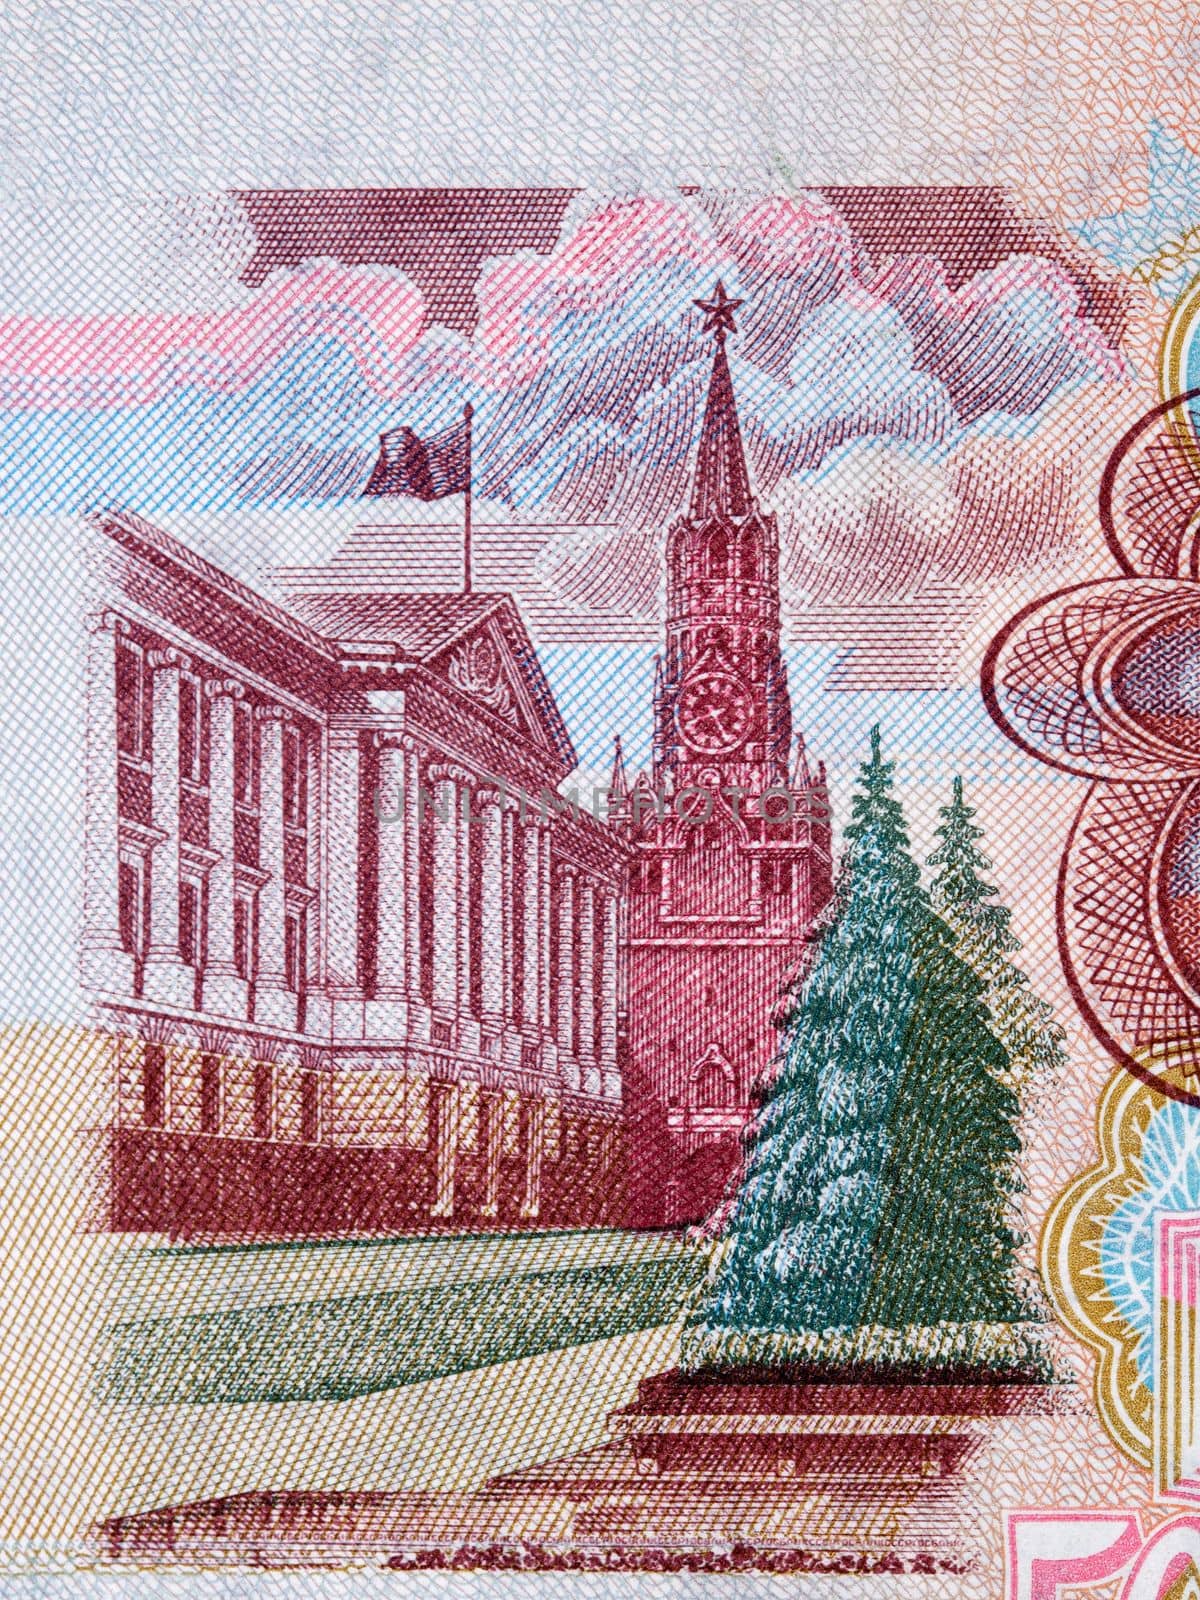 View of Kremlin from Russian money - ruble by johan10